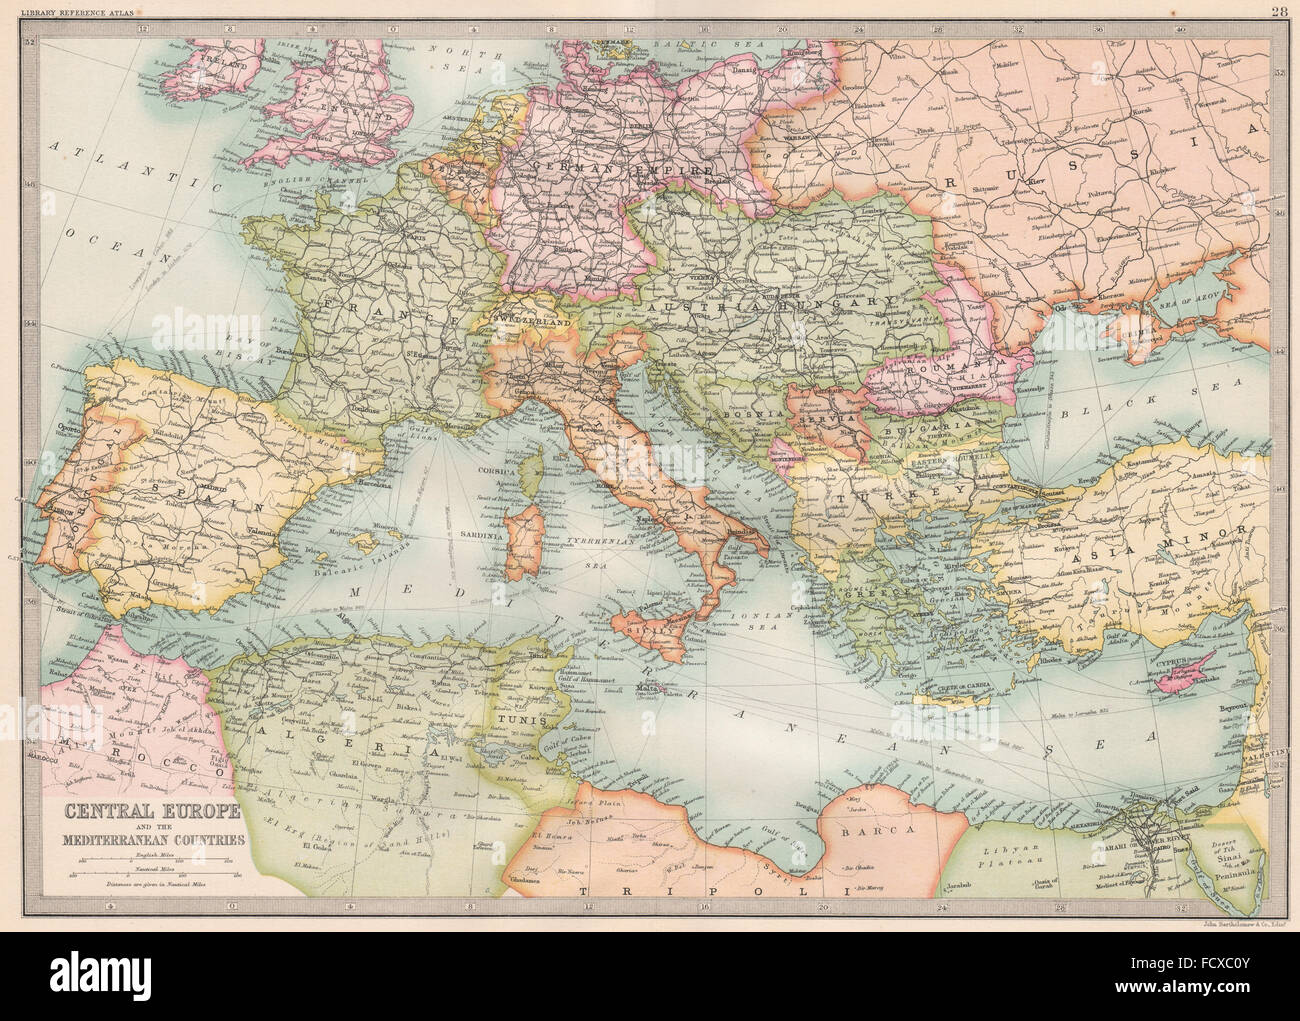 Europa: Europa centrale e i paesi mediterranei. Bartolomeo, 1890 Mappa Foto Stock